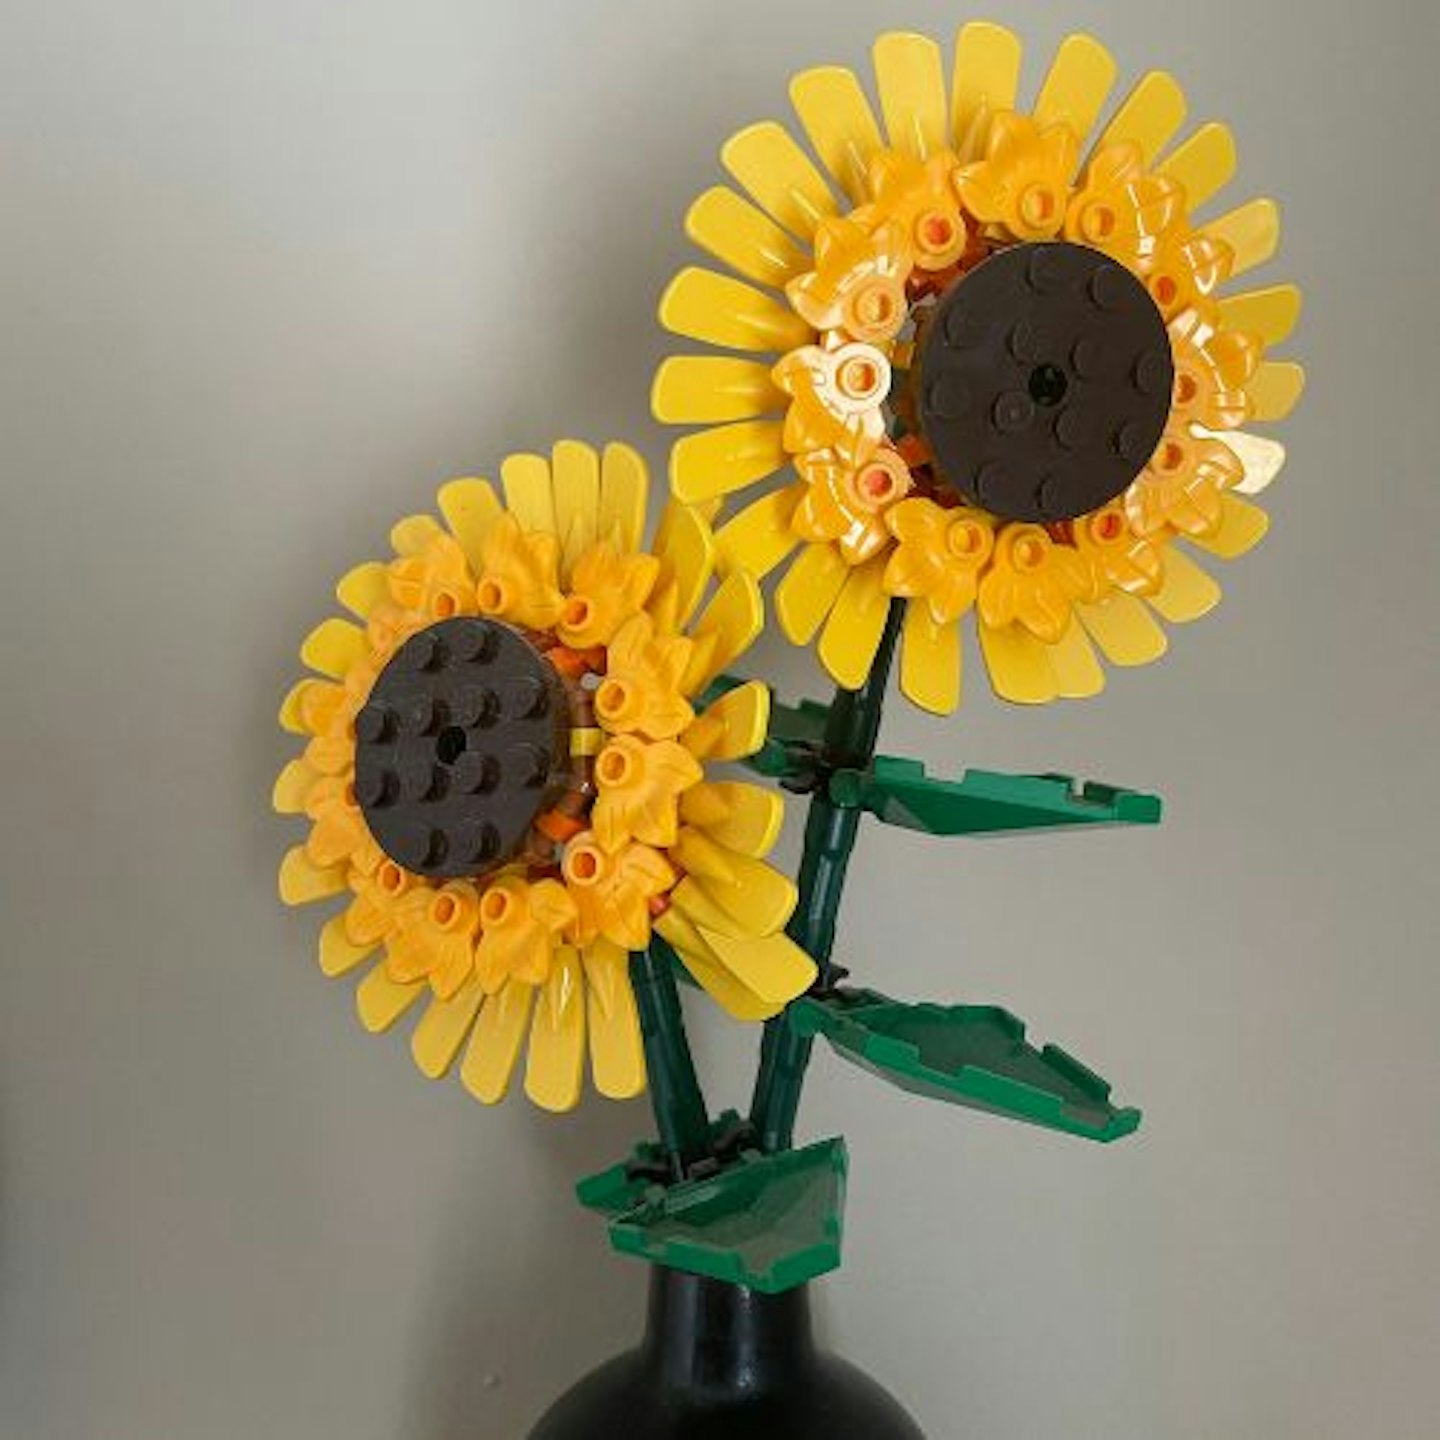 LEGO Sunflowers best gifts for teacher